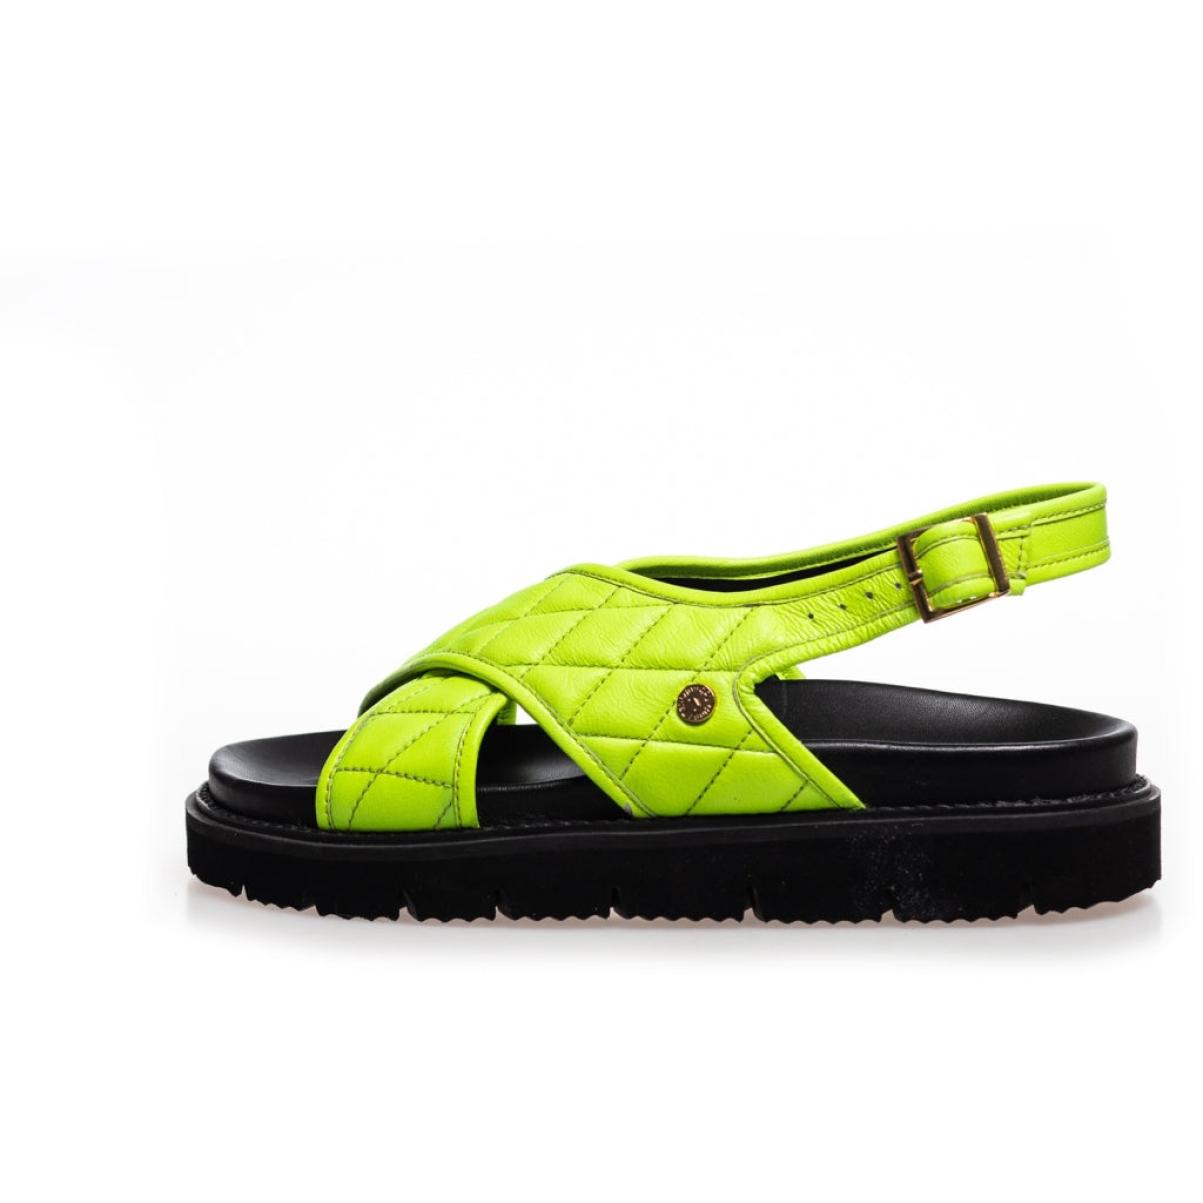 Specialized Sandals Copenhagen Shoes Women Going Wild Neon - Neon Green